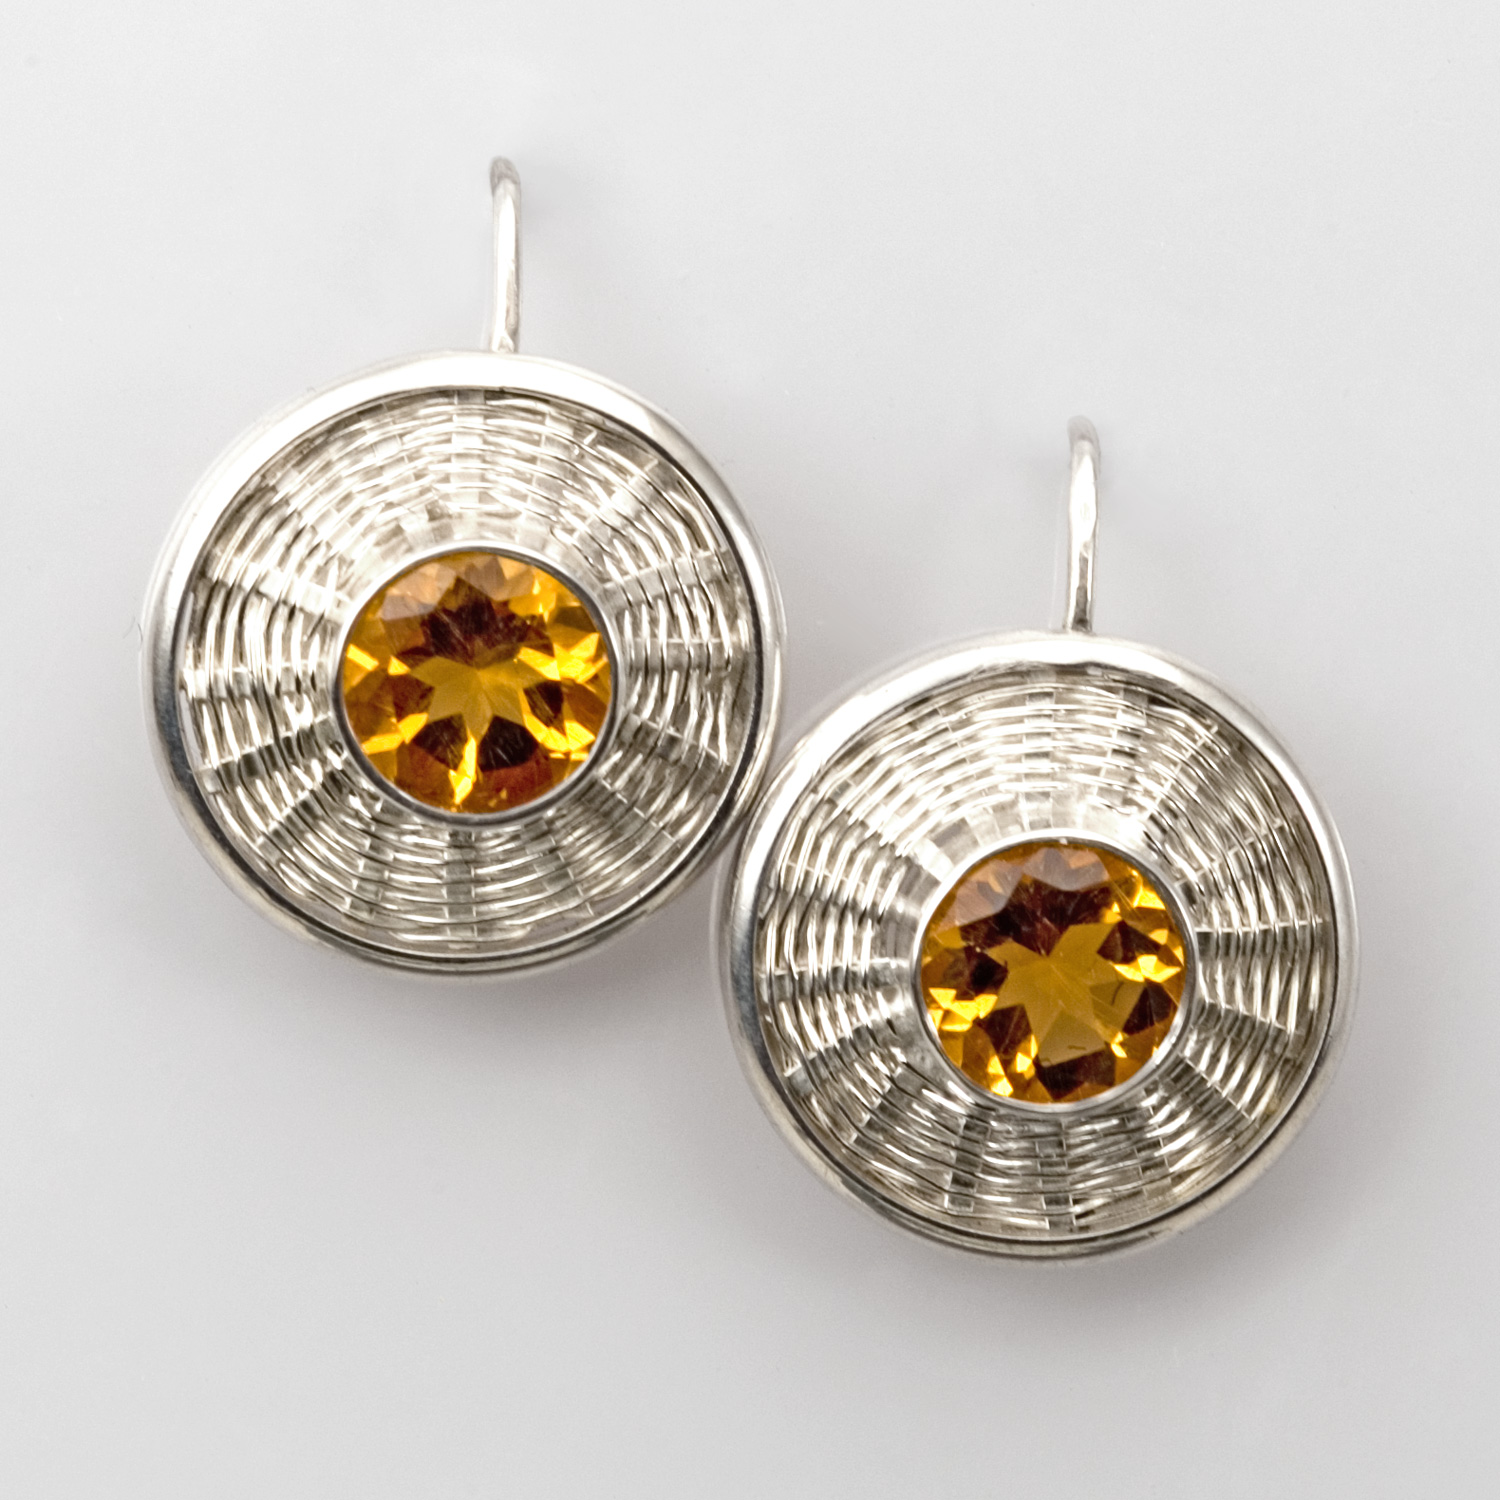 Sunburst Weave Earrings in sterling & fine silver with citrine by Tamberlaine